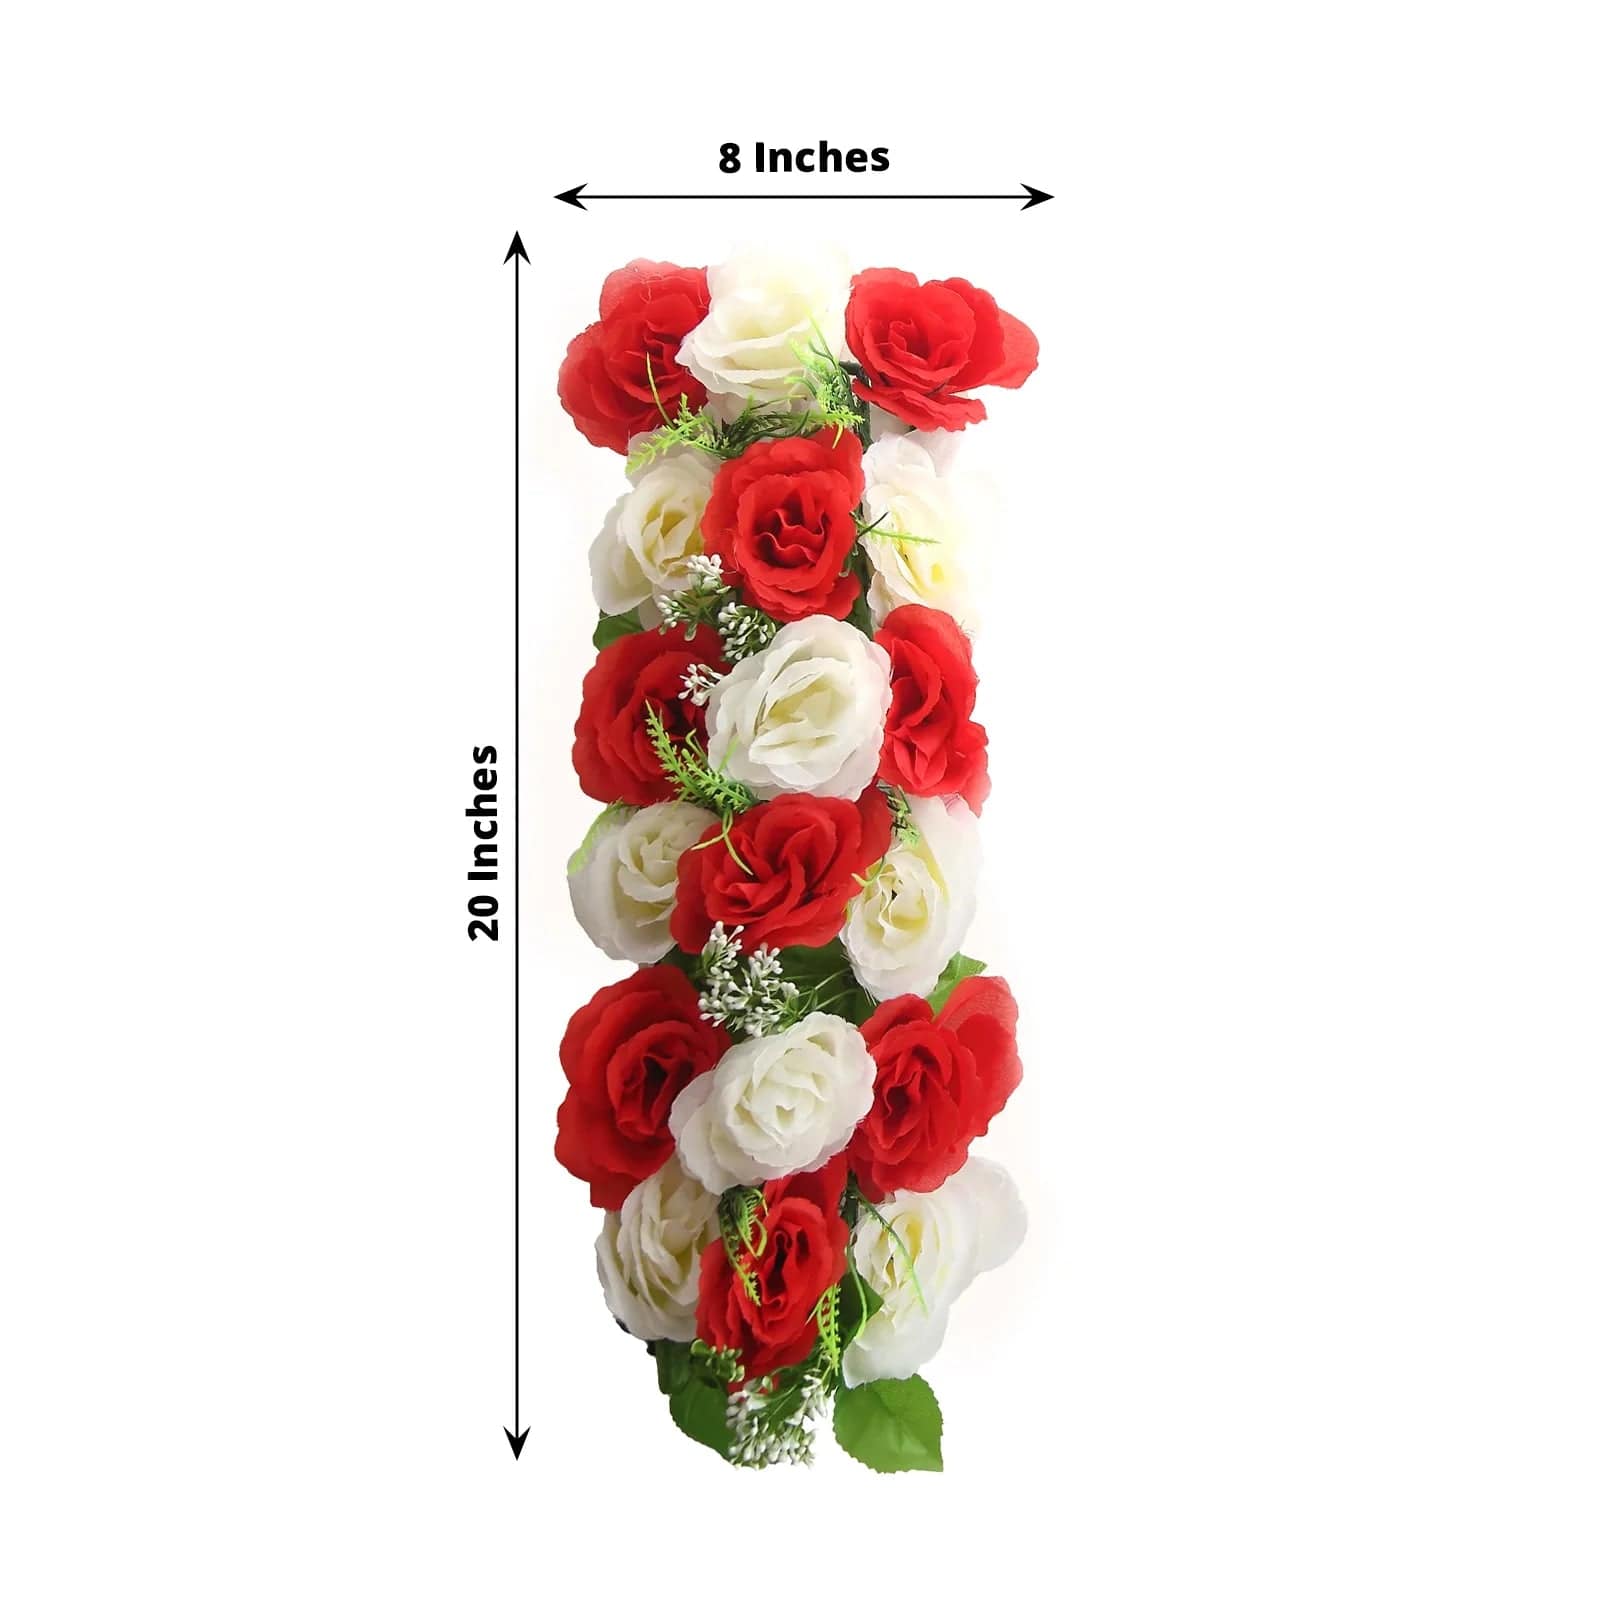 6 Artificial Rose Flower Panels Silk Floral Table Centerpiece